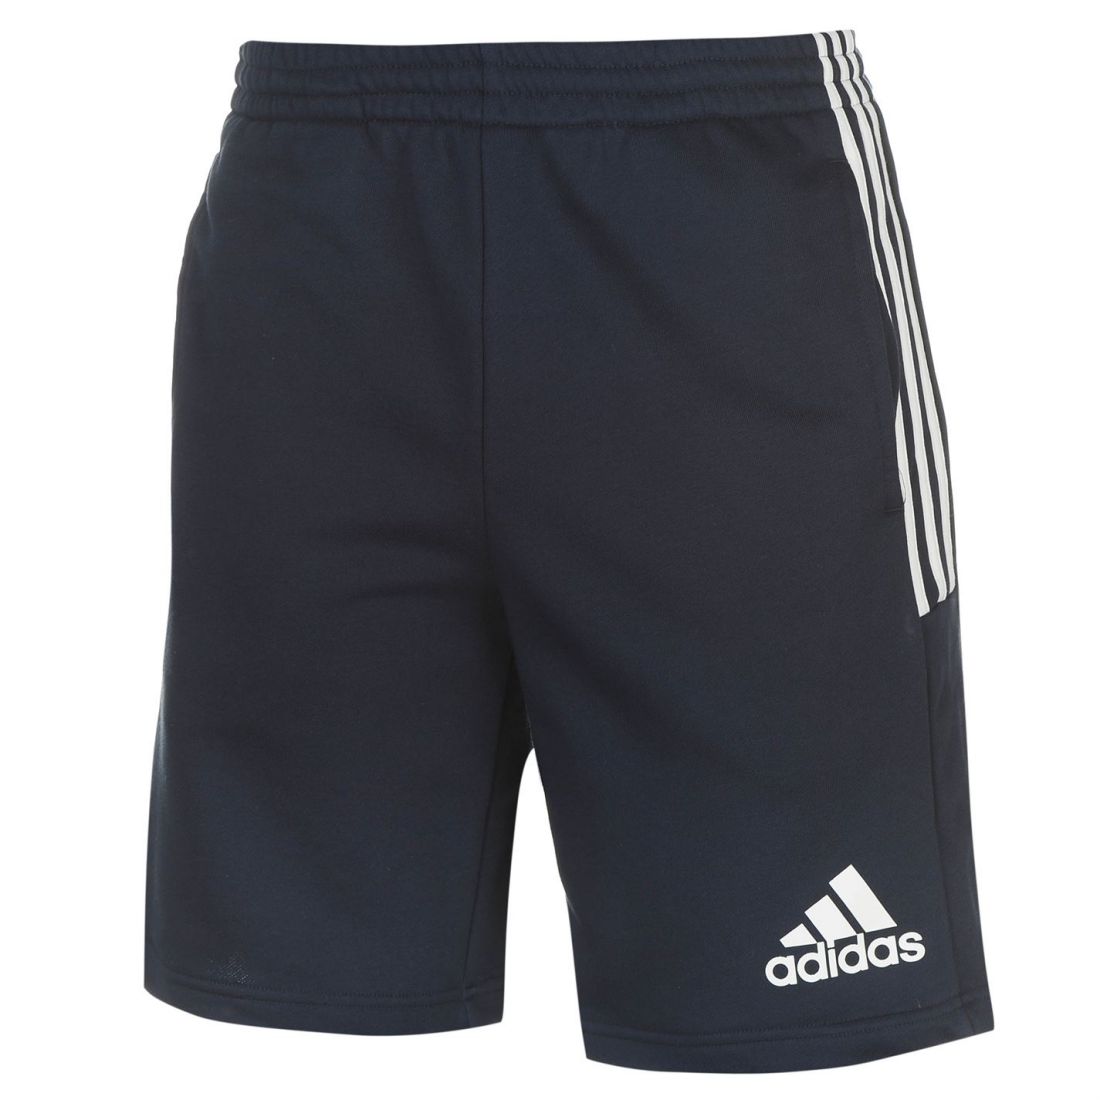 adidas Men 3S Jersey Shorts Pants Trousers Bottoms Lightweight ...